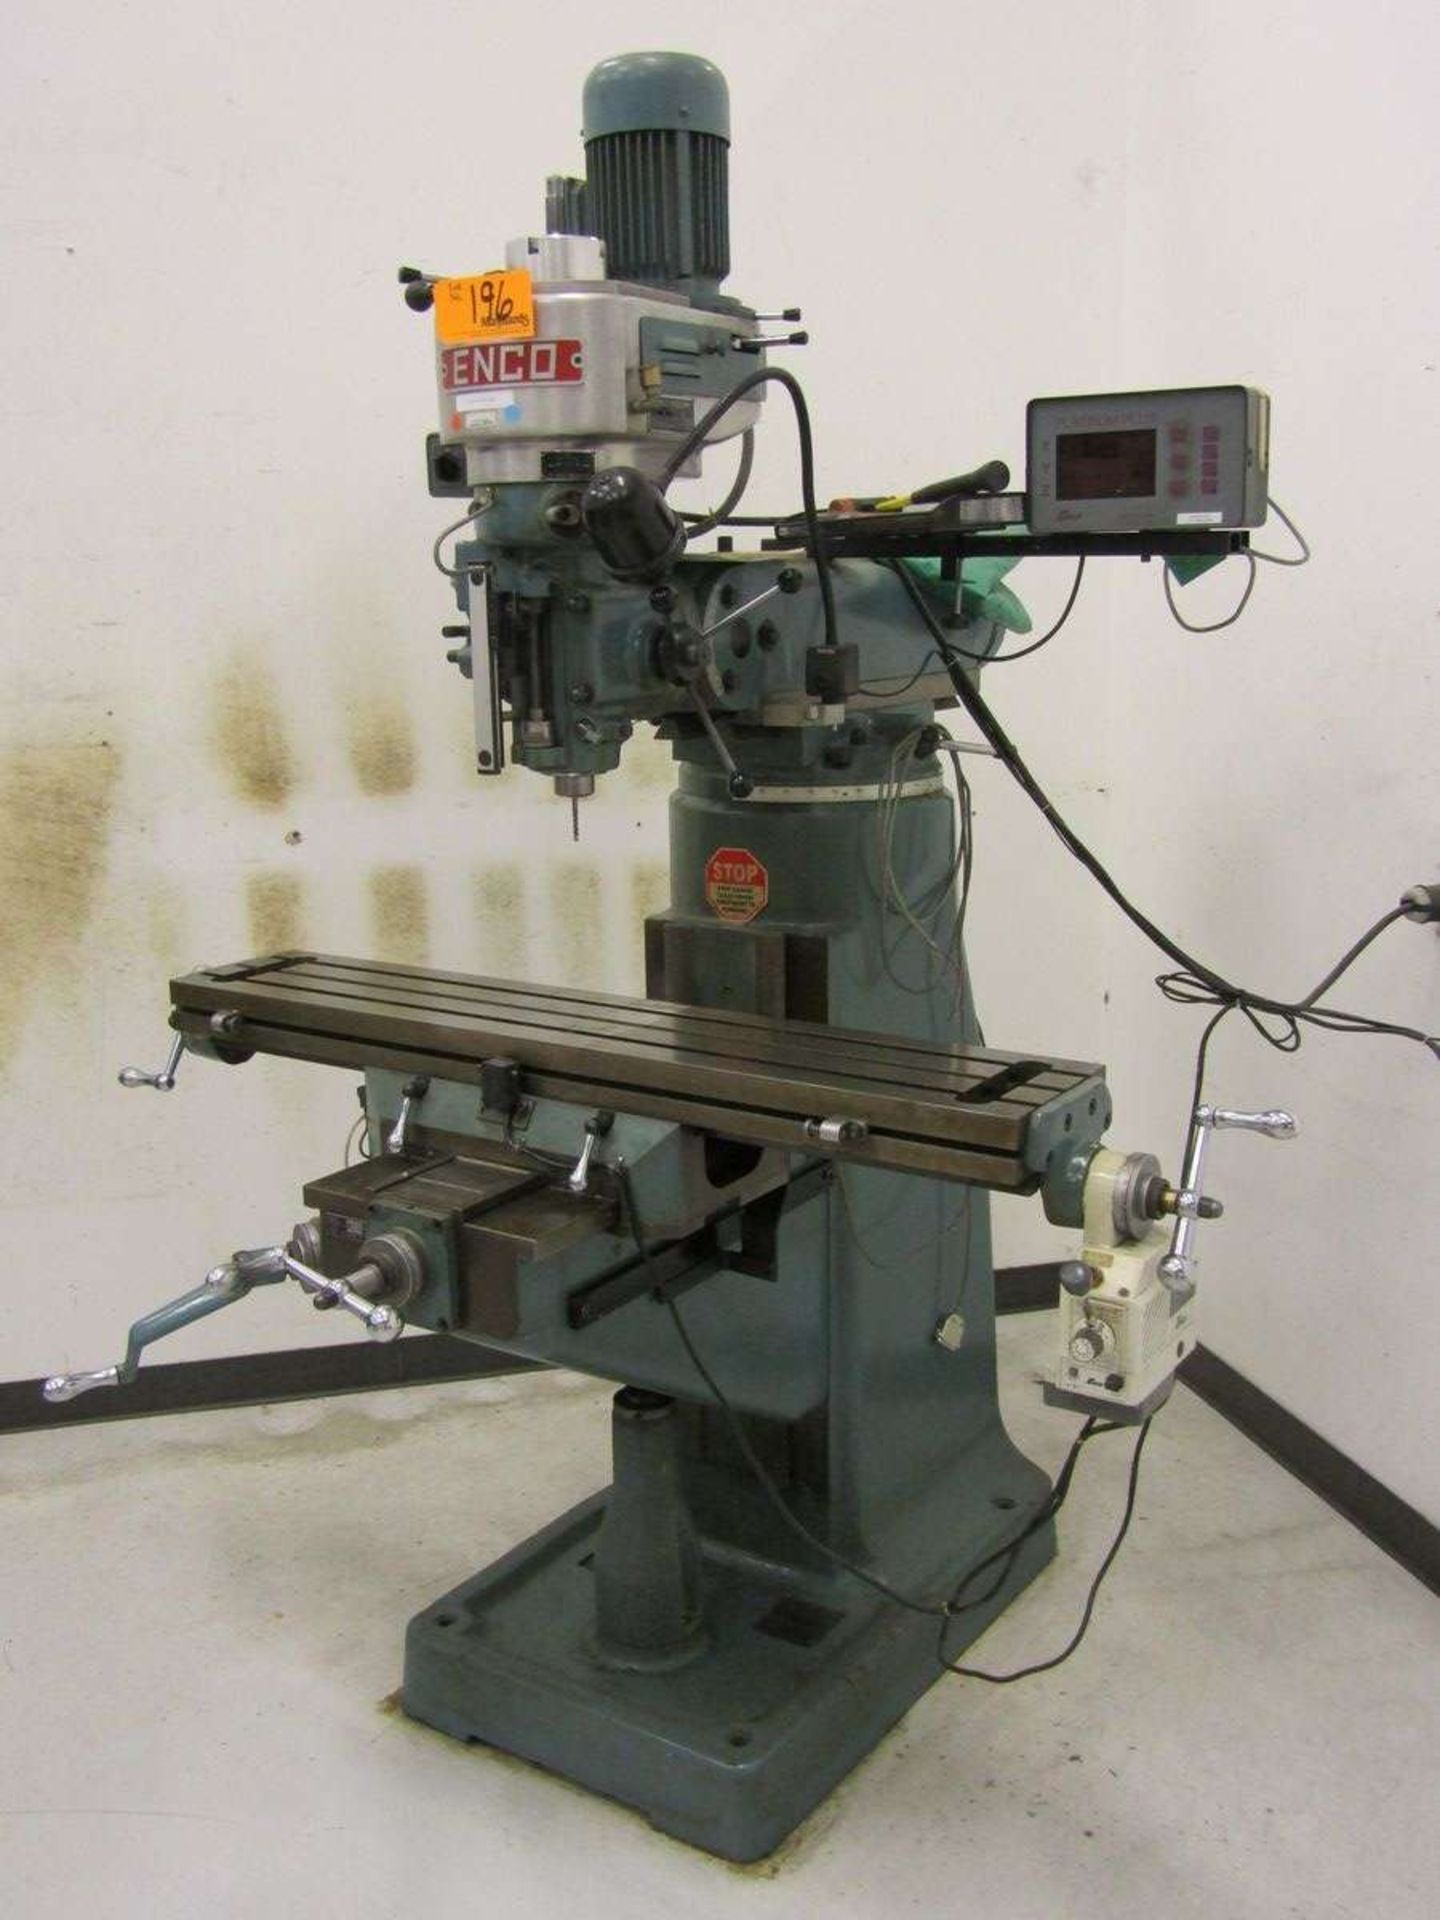 1996 Enco 100-1597 Vertical Milling Machine